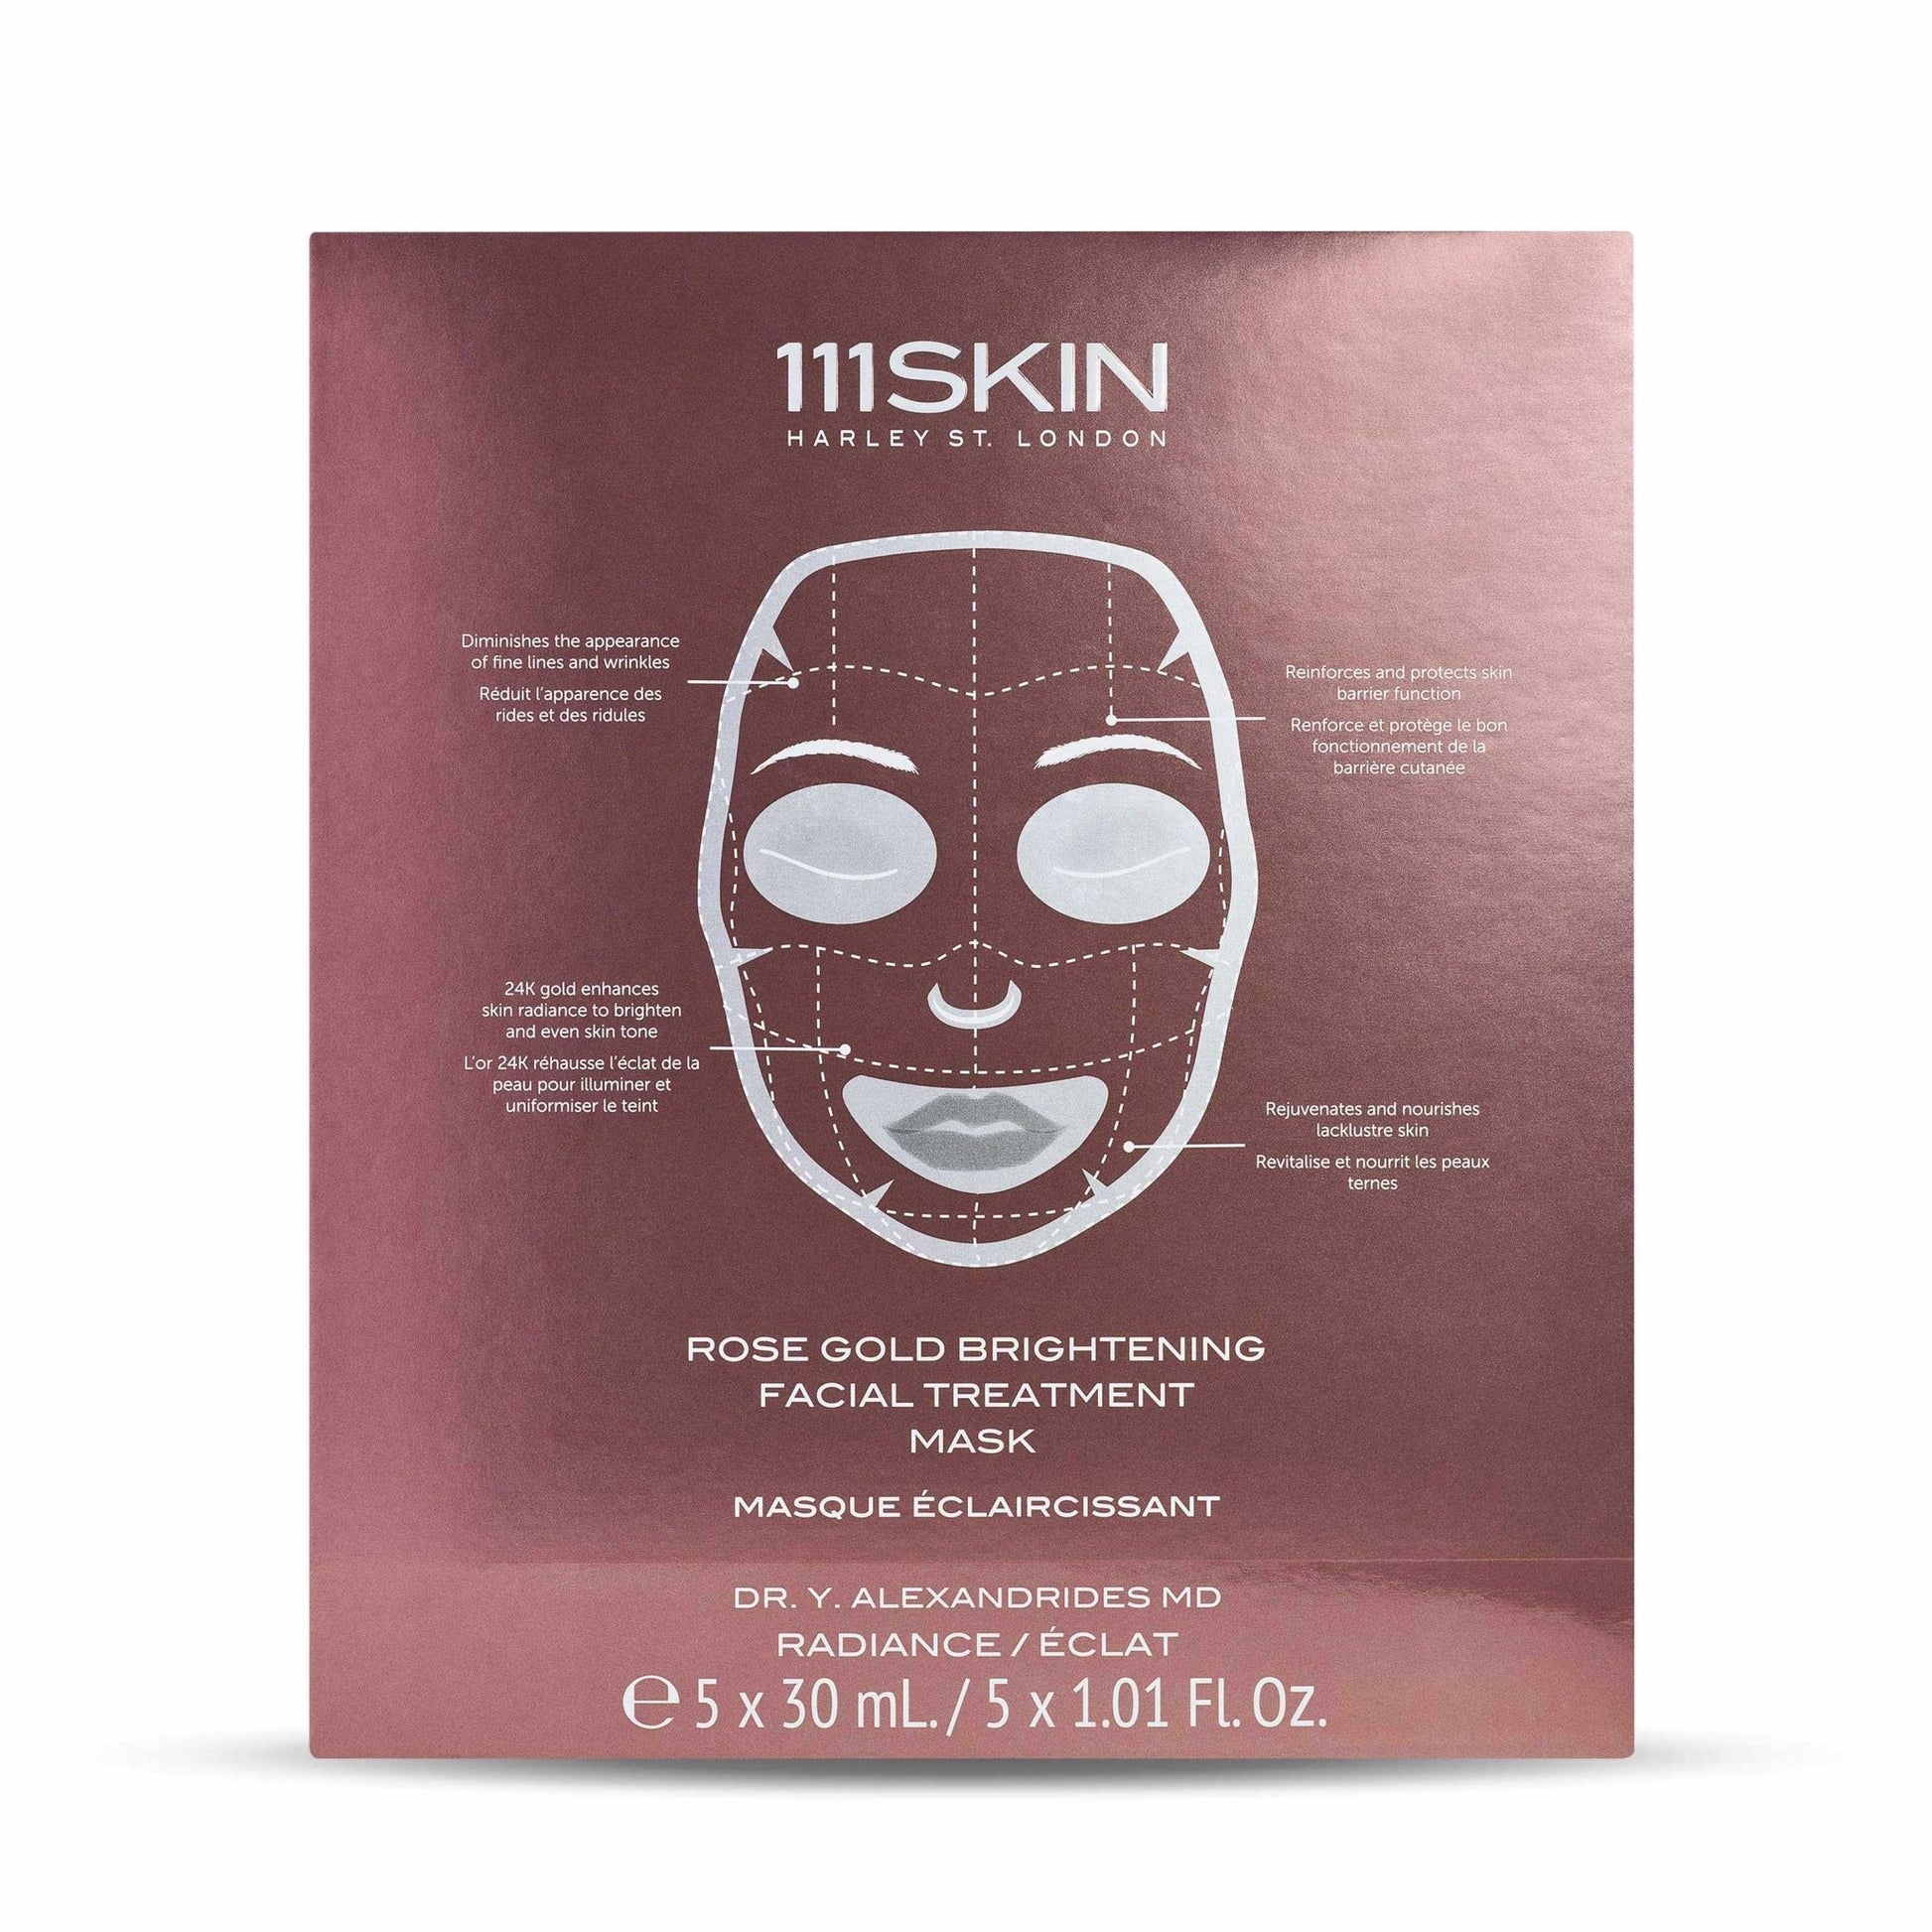 Rose Gold Brightening Facial Treatment Mask - 111SKIN EU